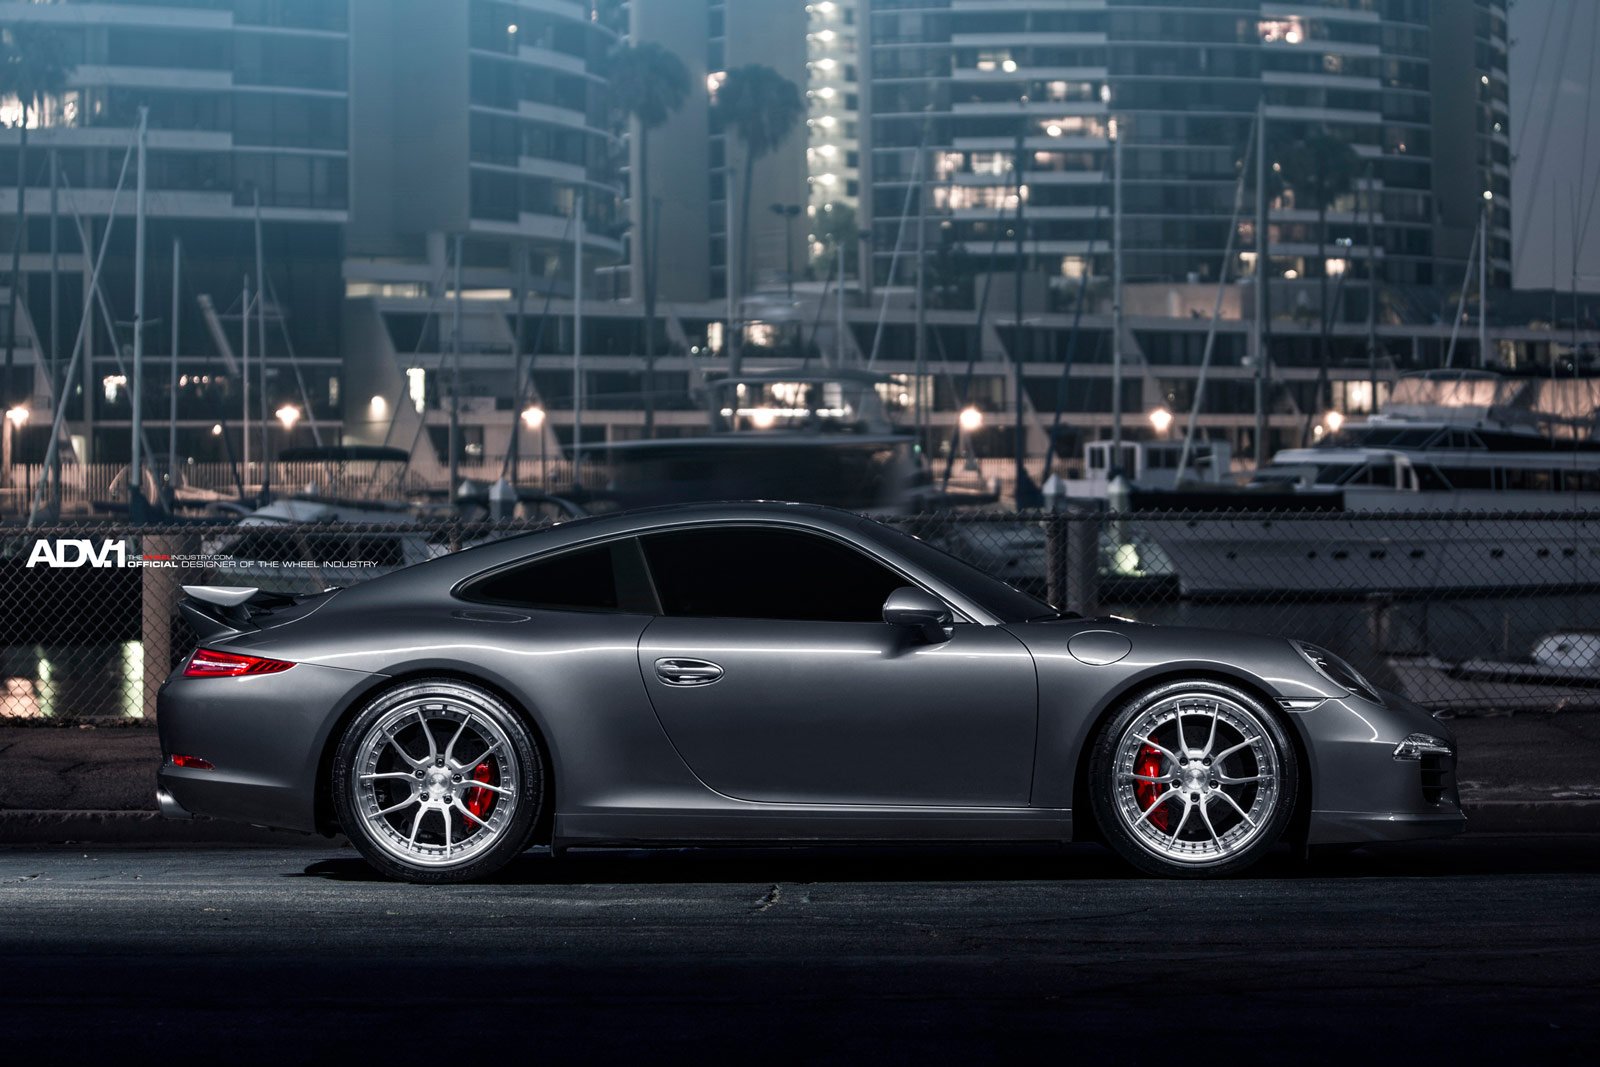 2014, Adv1, Wheels, Porsche 991, Carrera s, Supercars Wallpaper